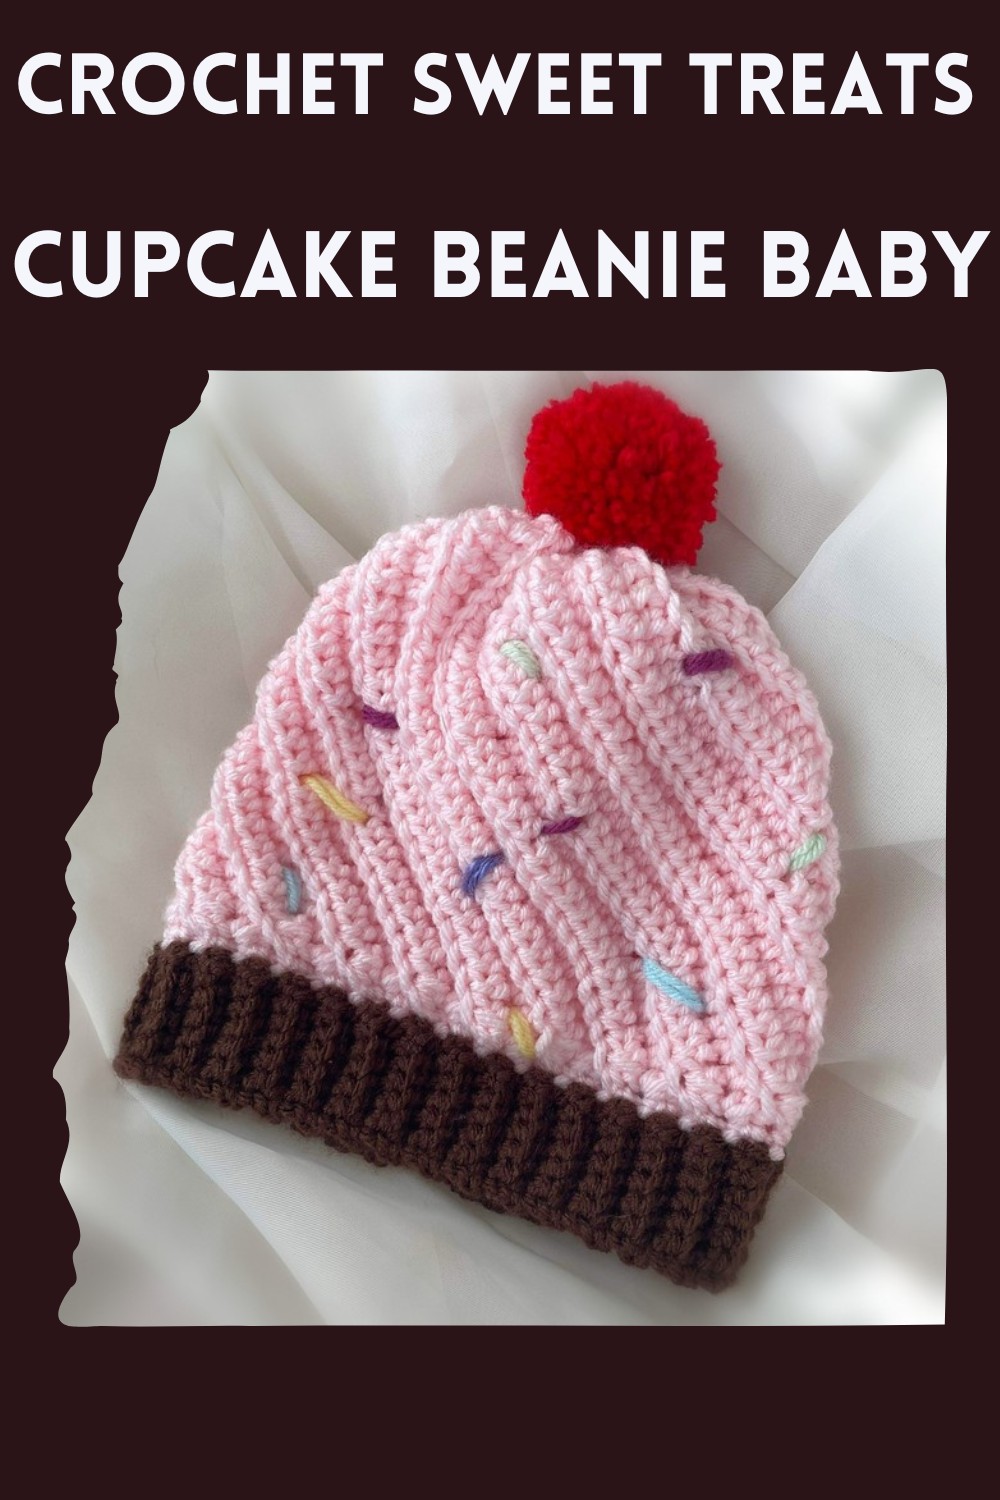 Crochet Sweet Treats Cupcake Beanie Baby Pattern